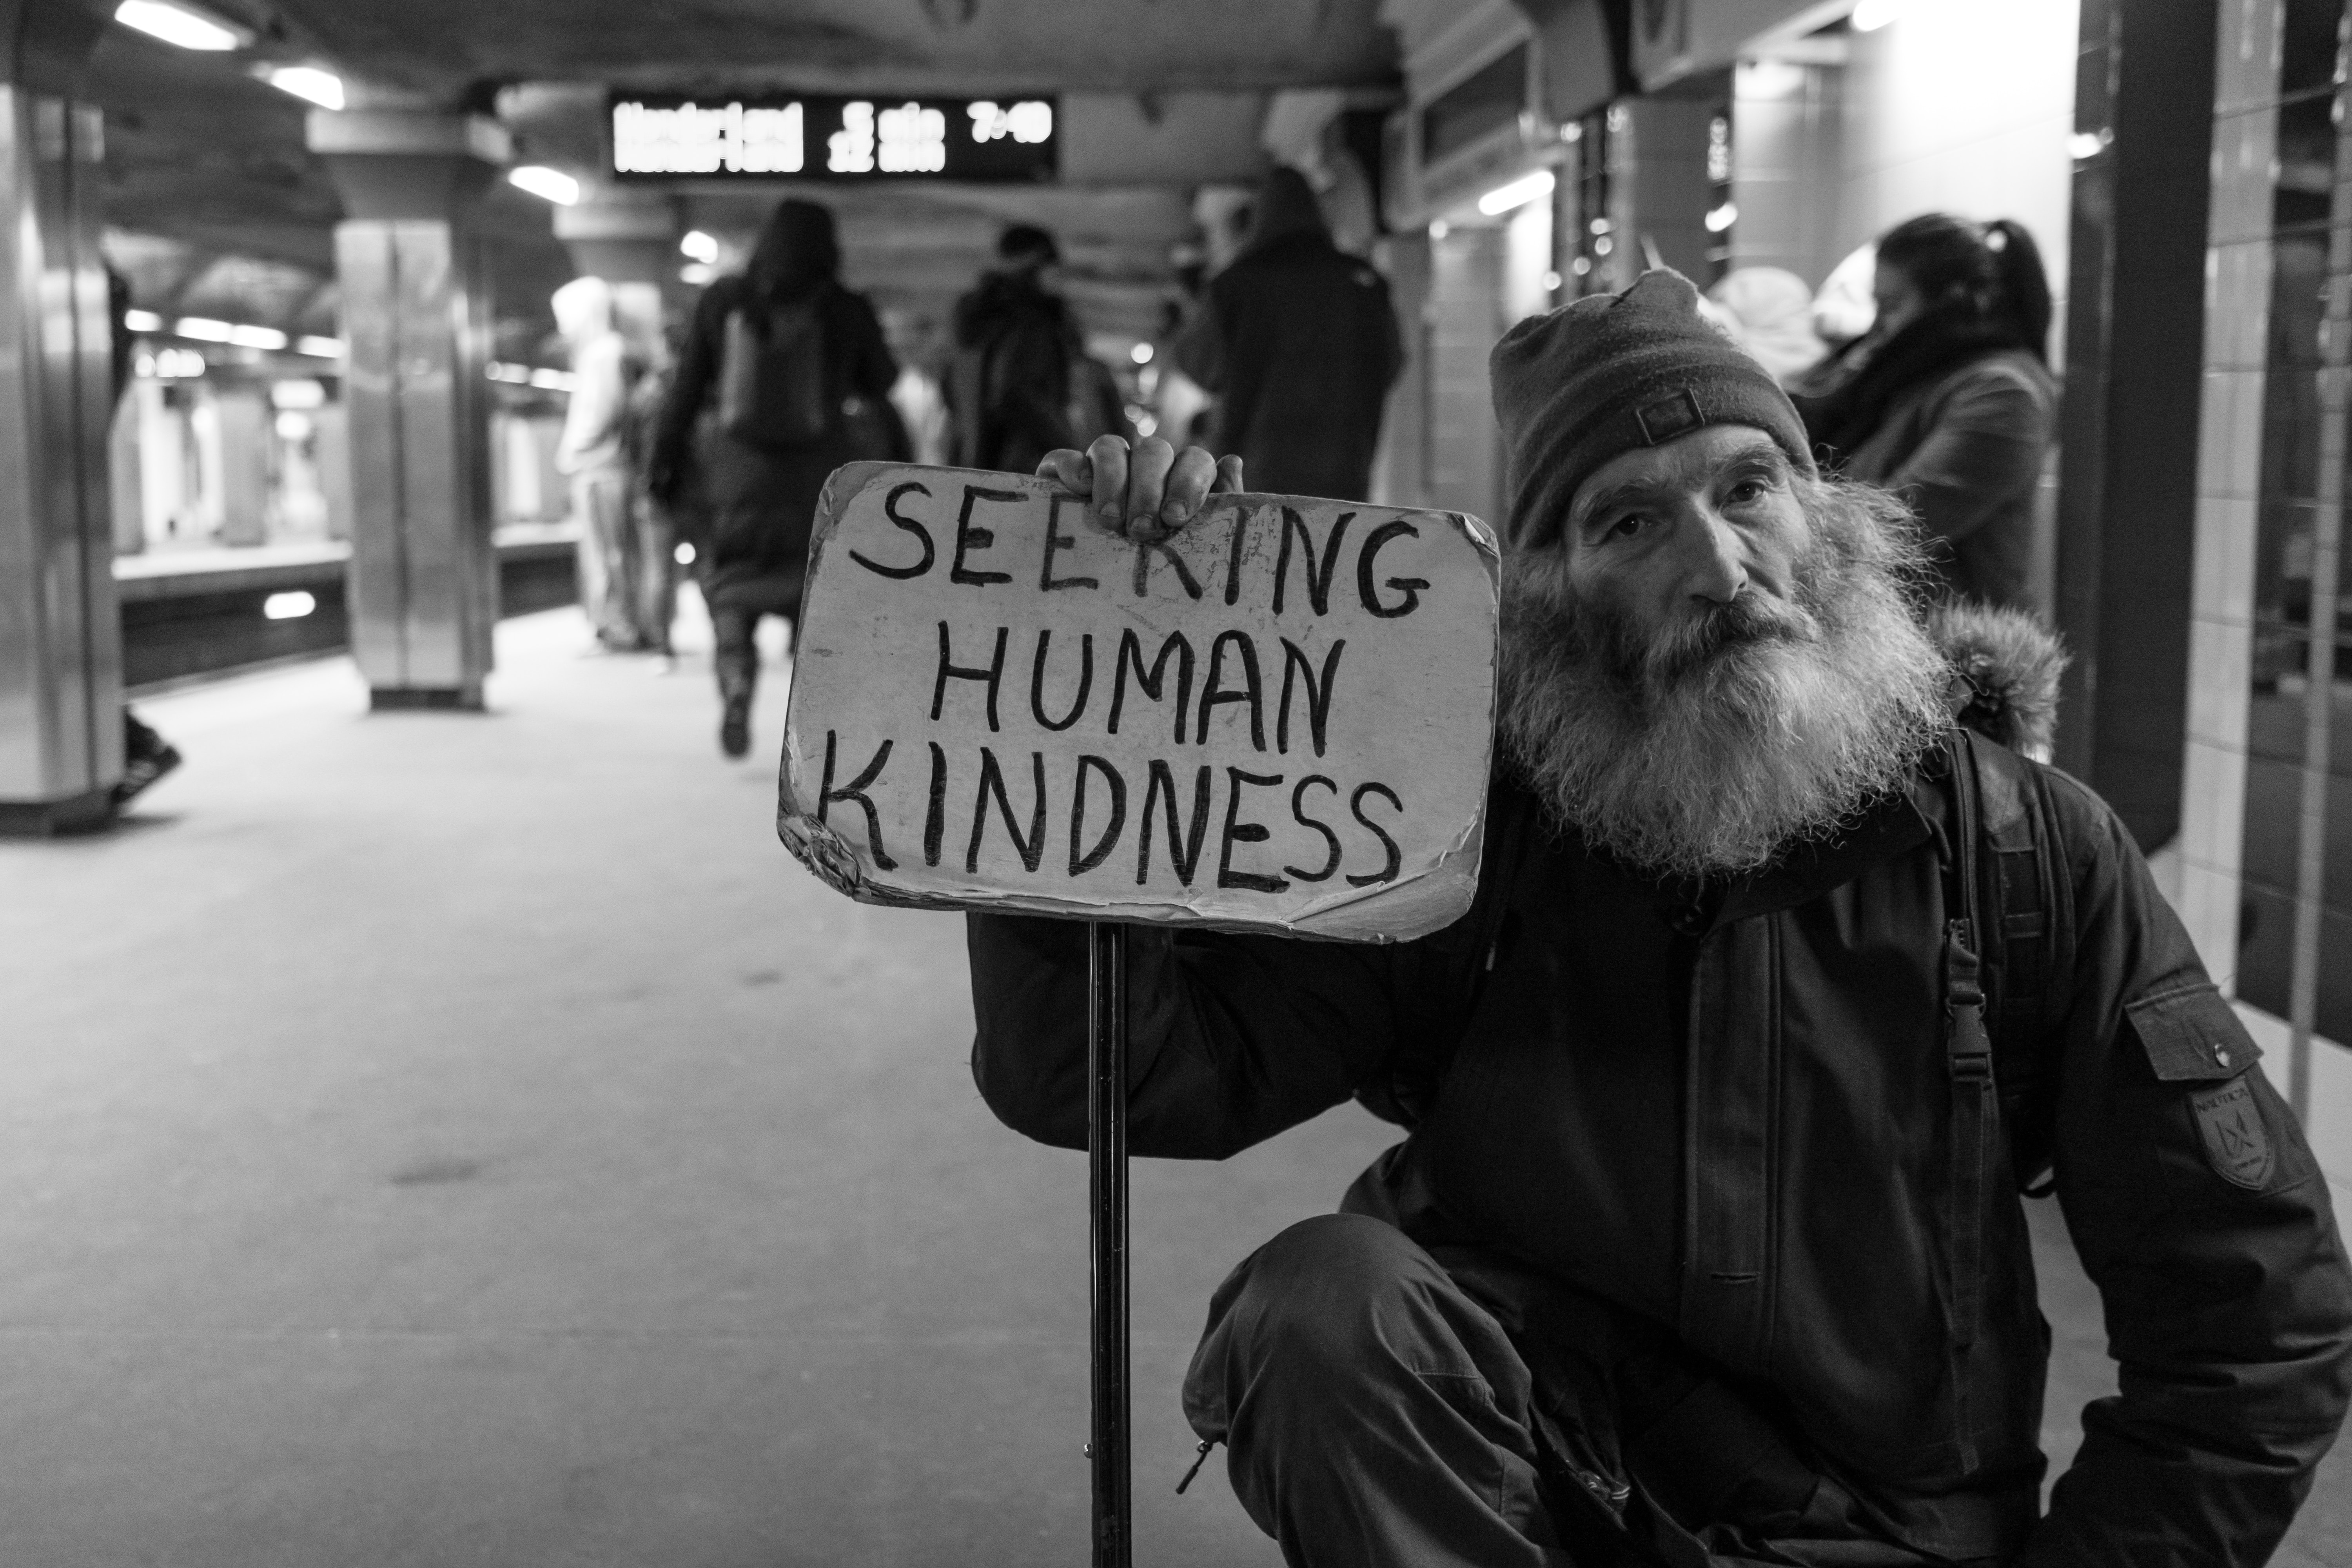 Man holding sign that says, "Seeking human kindness"